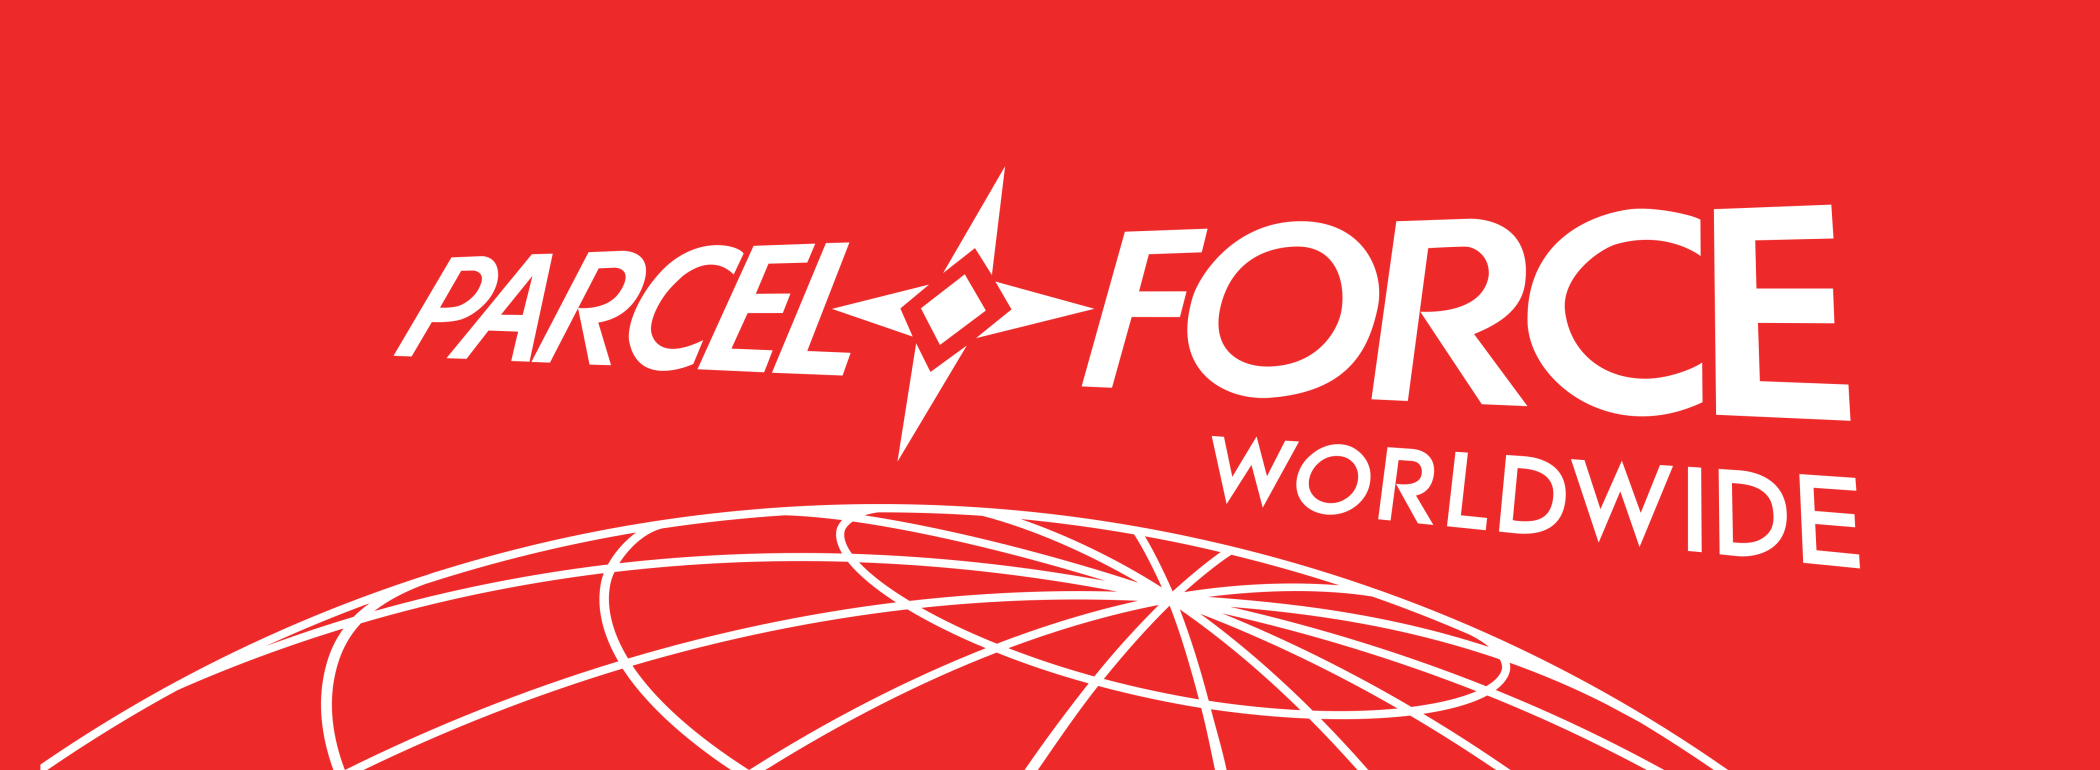 Parcelforce_Logo